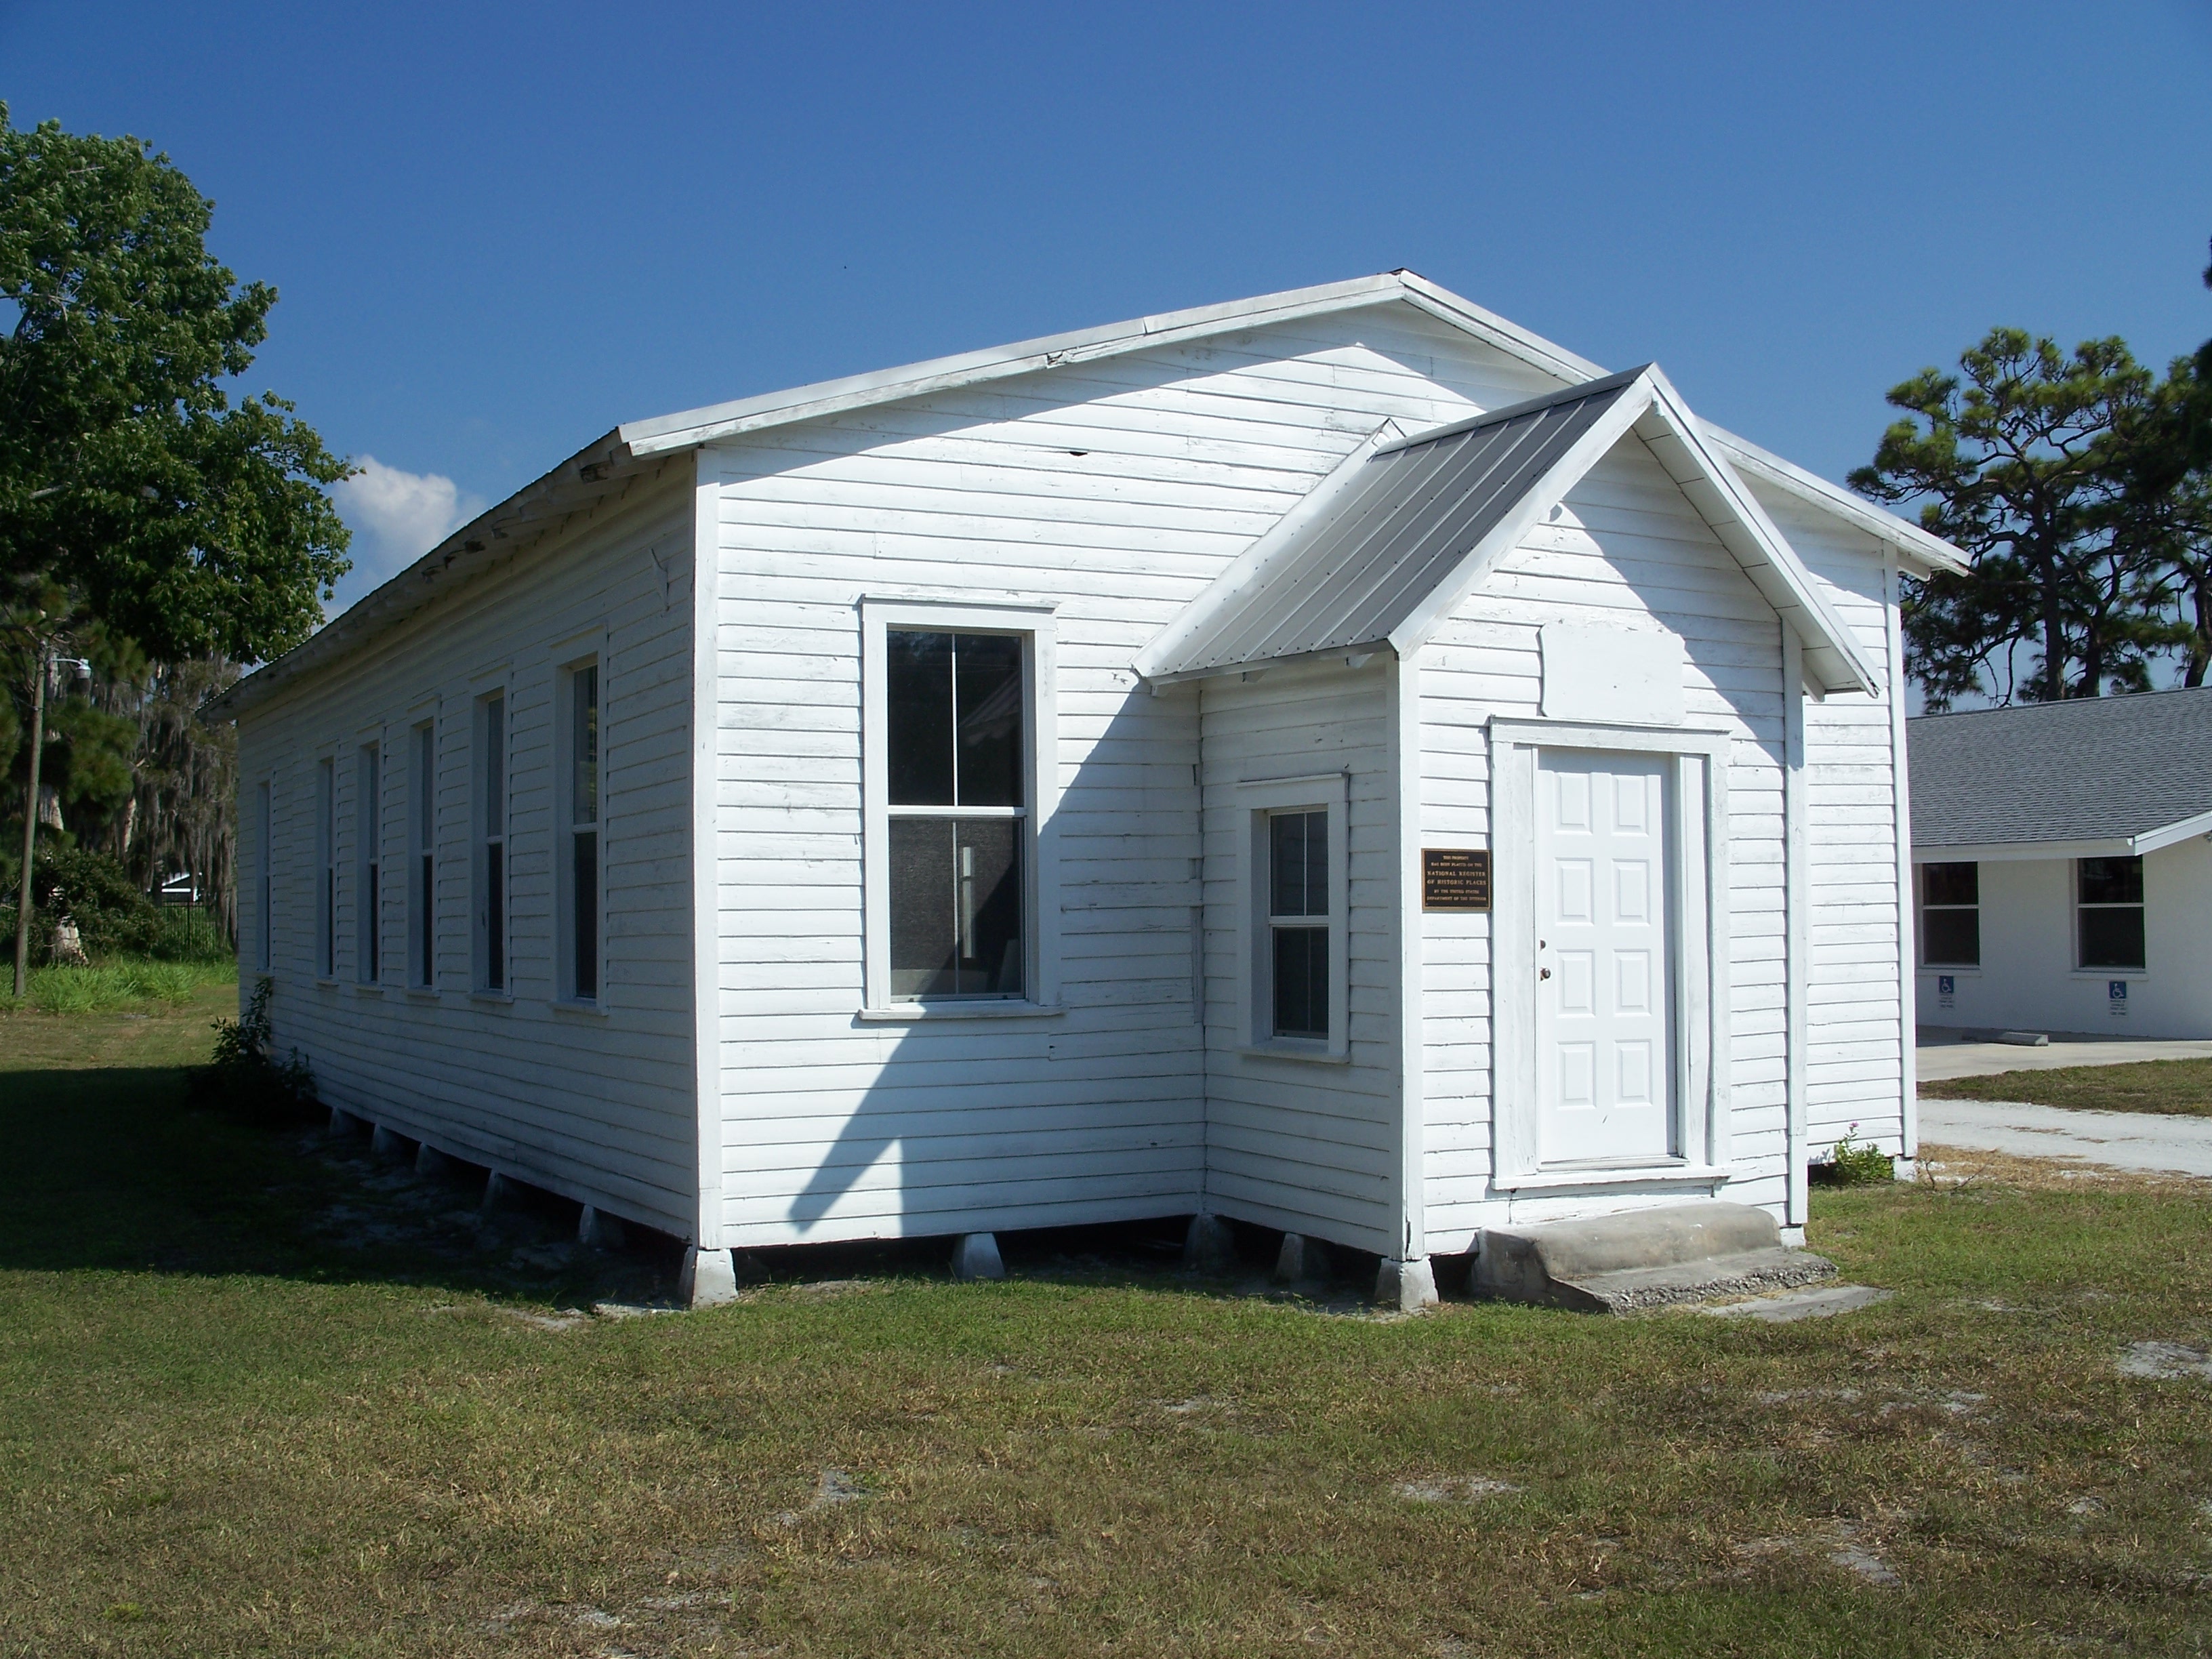 Laurel FL Johnson Chapel Baptist Church01.jpg. 